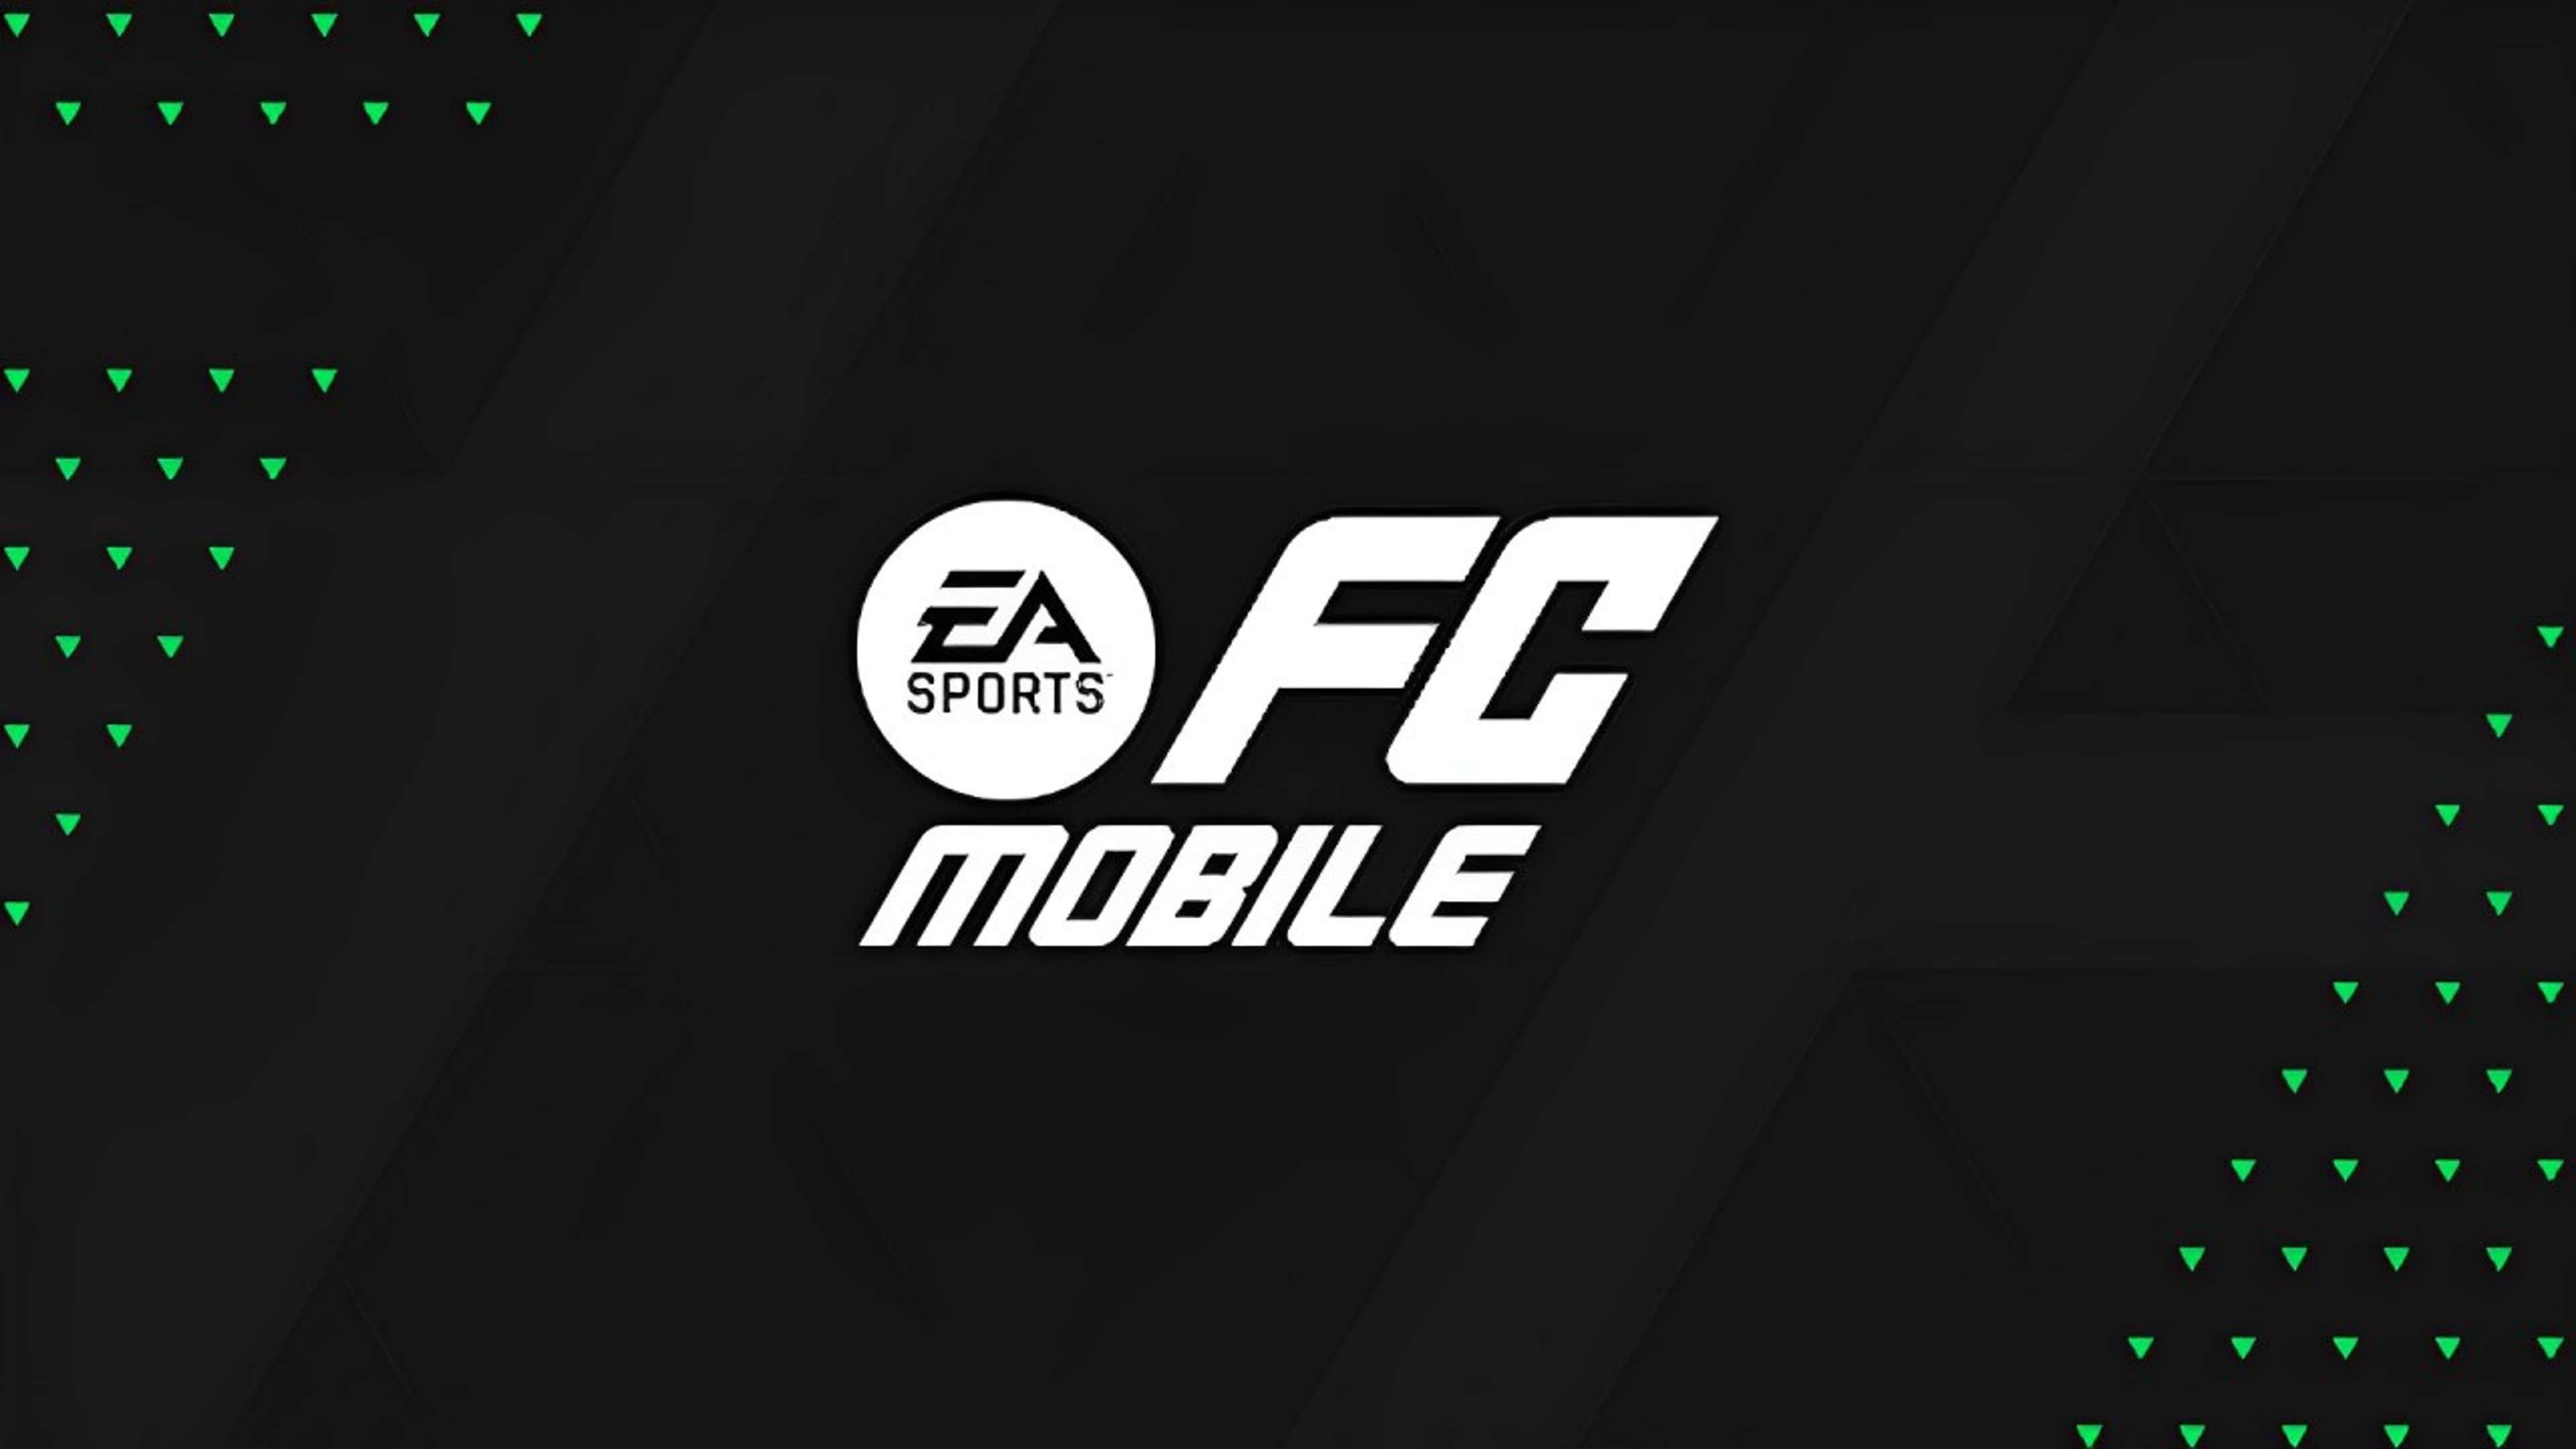 EA FC MOBILE